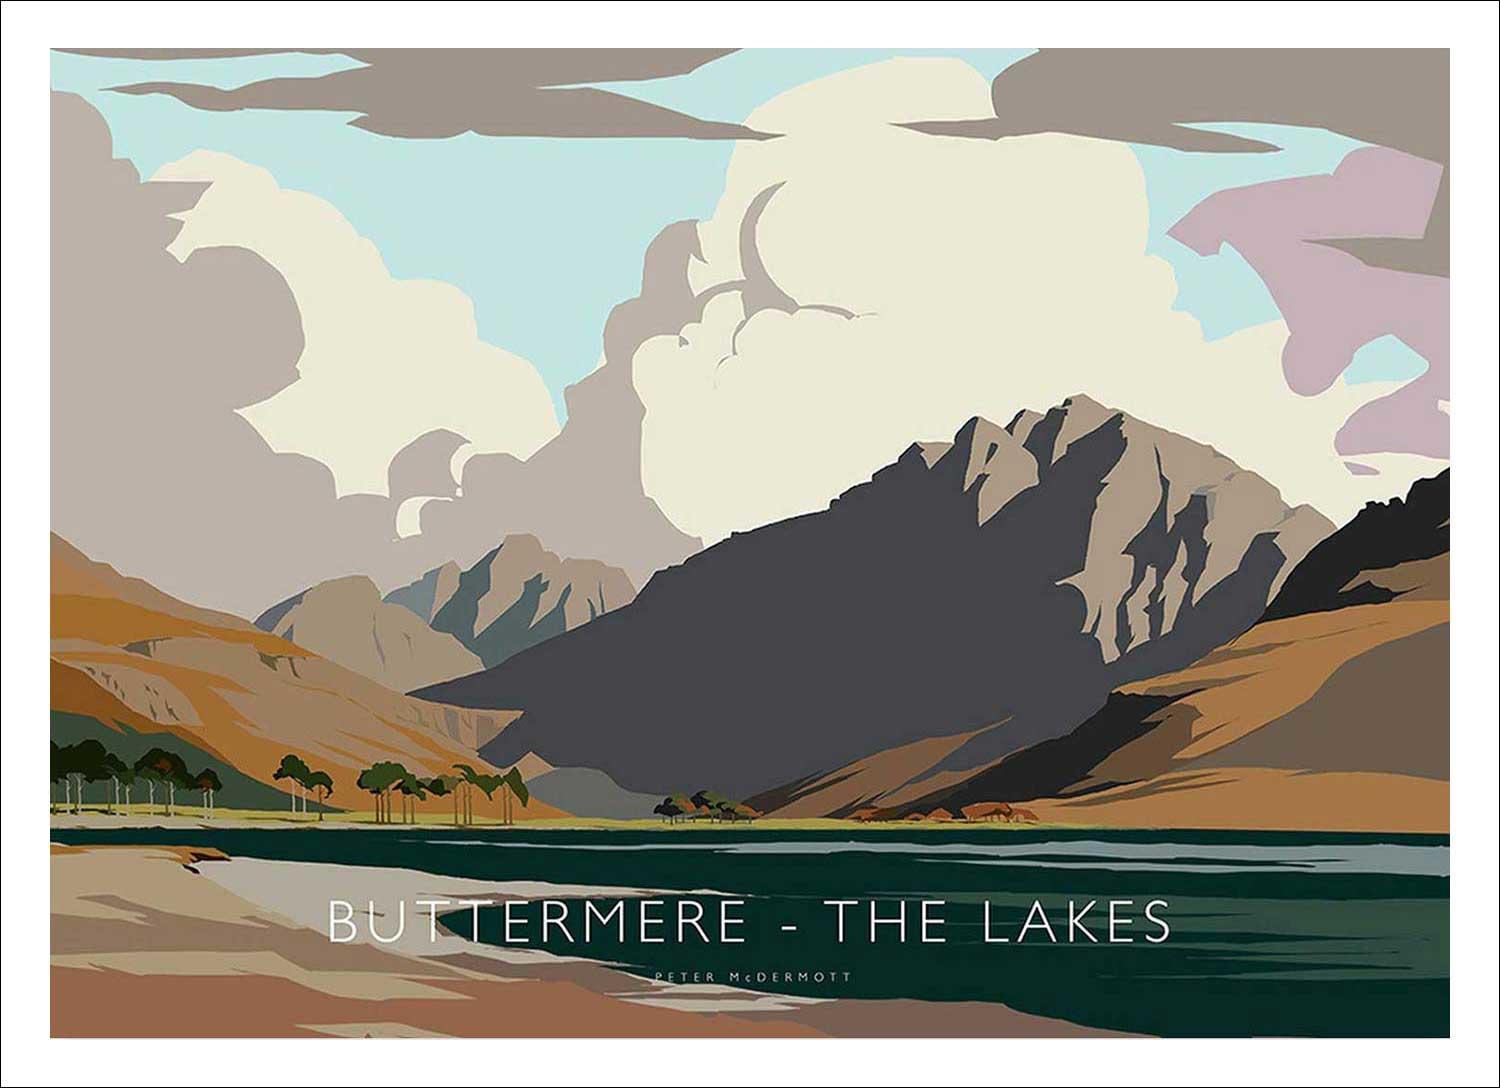 Buttermere, The Lakes Art Print from an original illustration by artist Peter McDermott